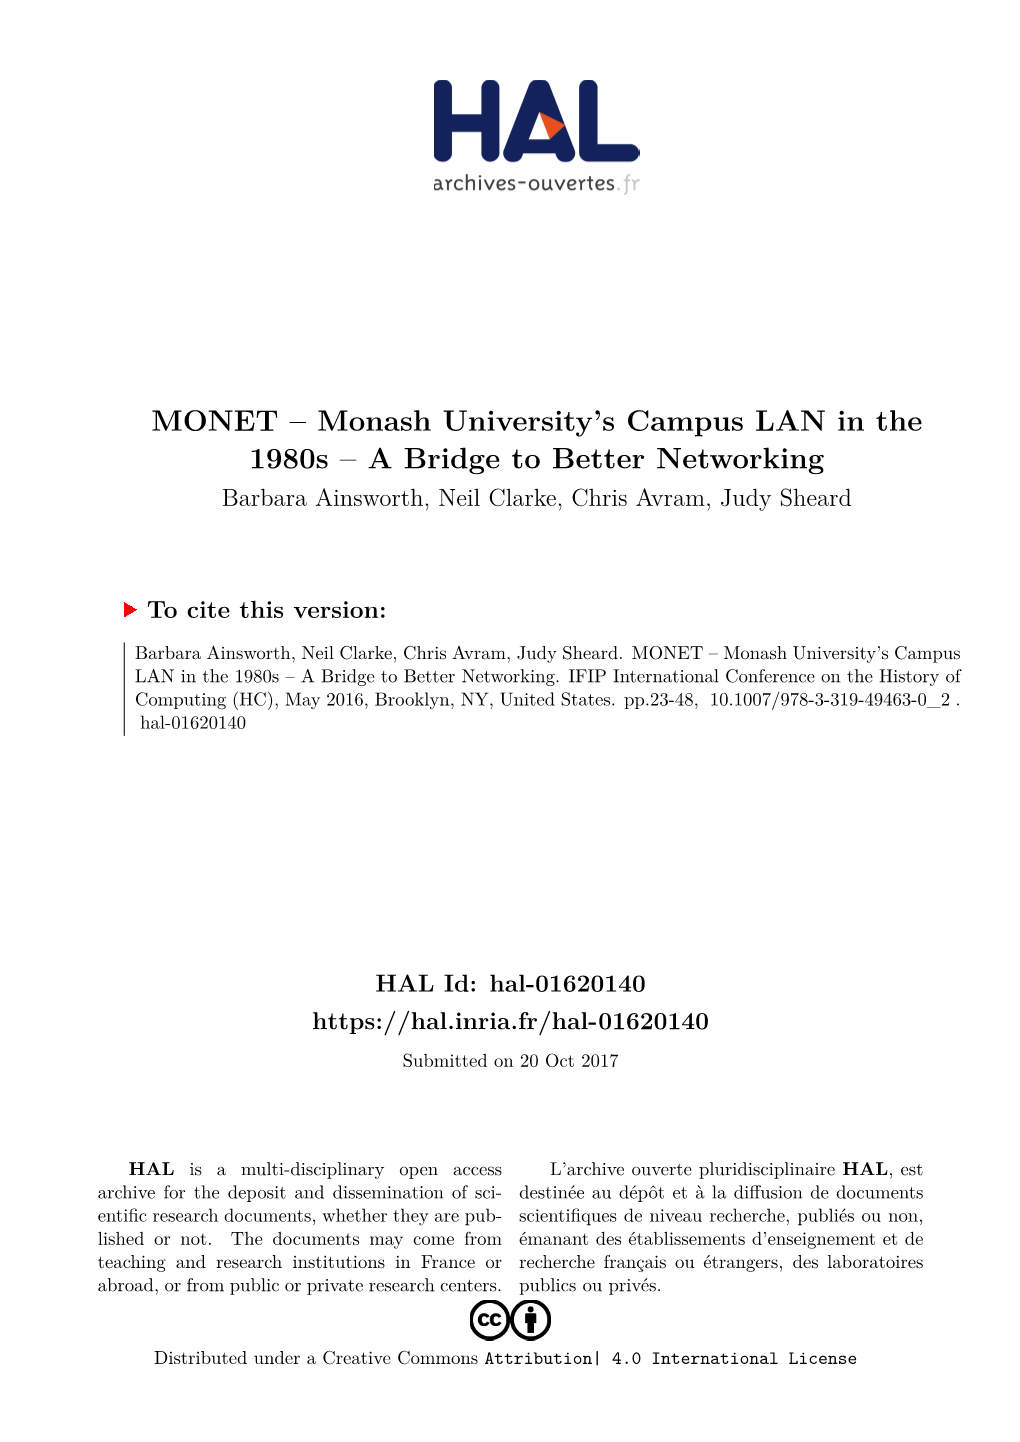 Monash University's Campus LAN in the 1980S